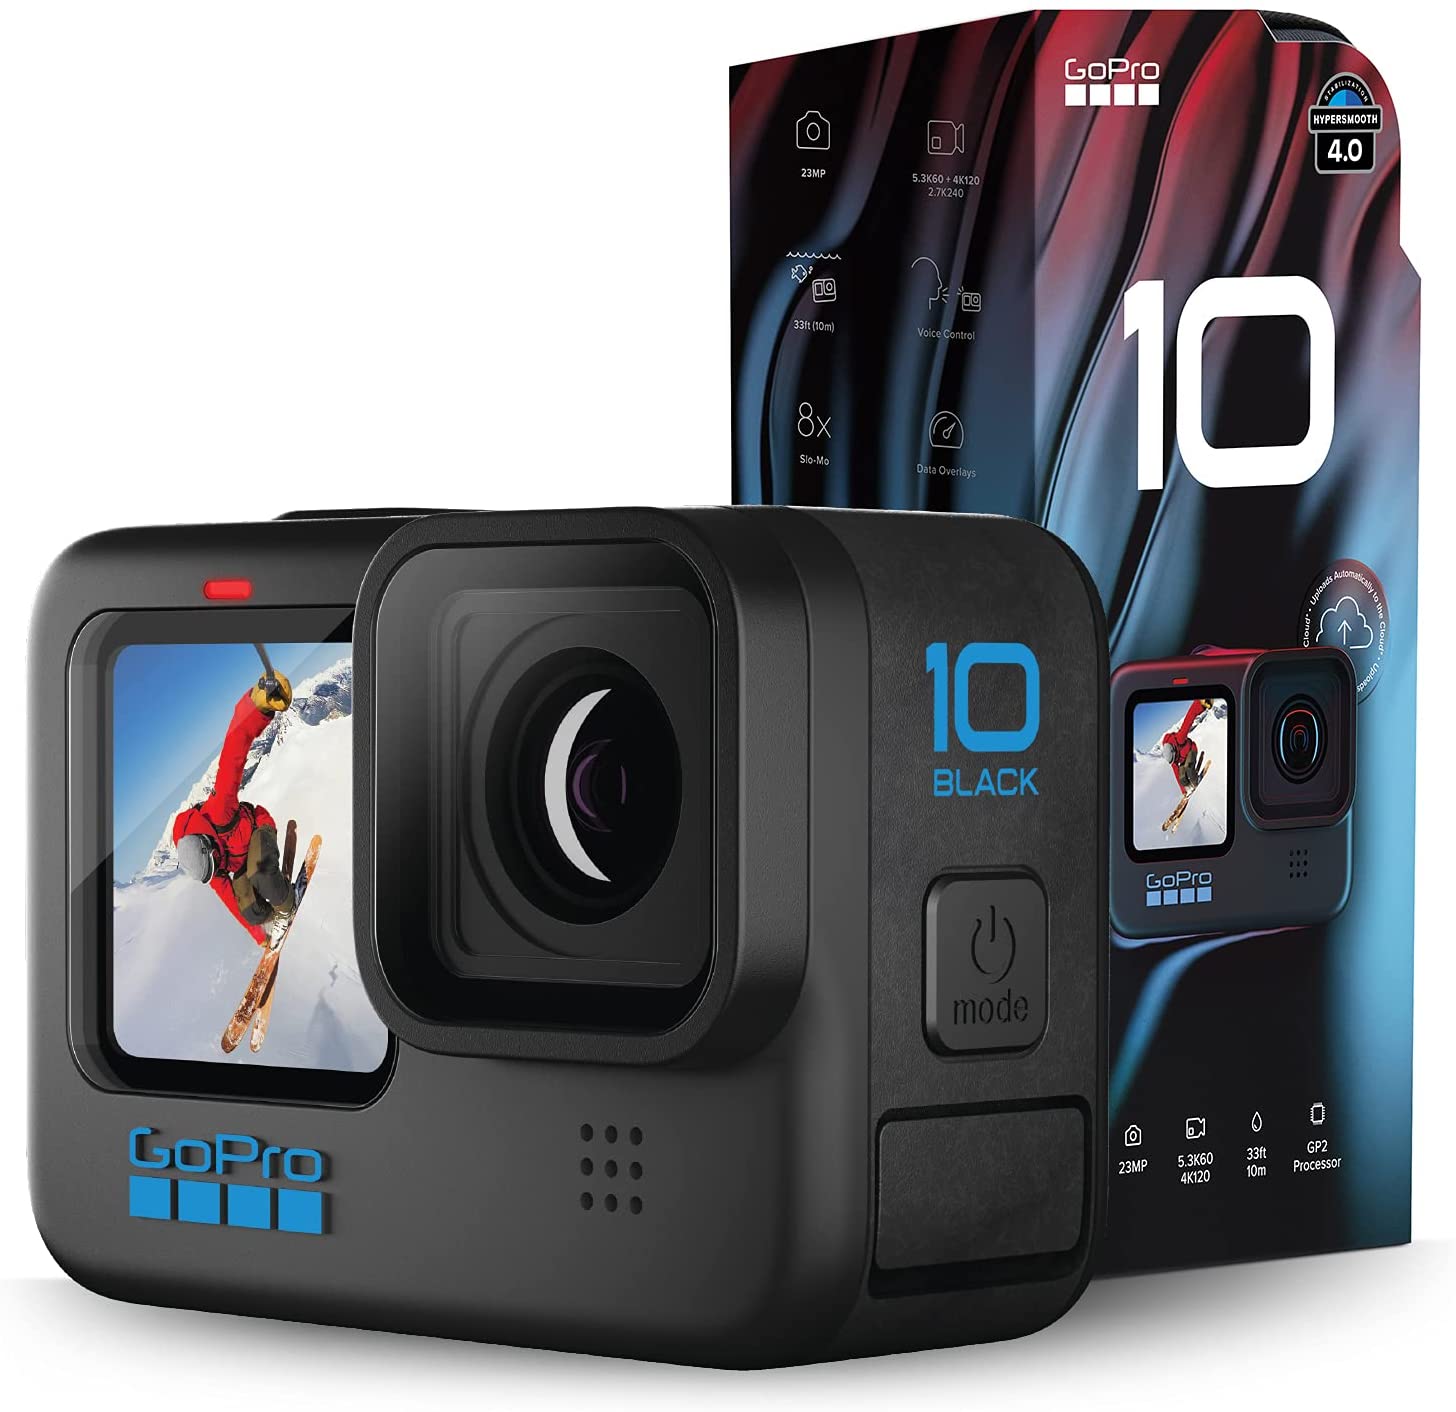 GoPro HERO10 Black アクションカメラ | パンダスタジオ・レンタル公式